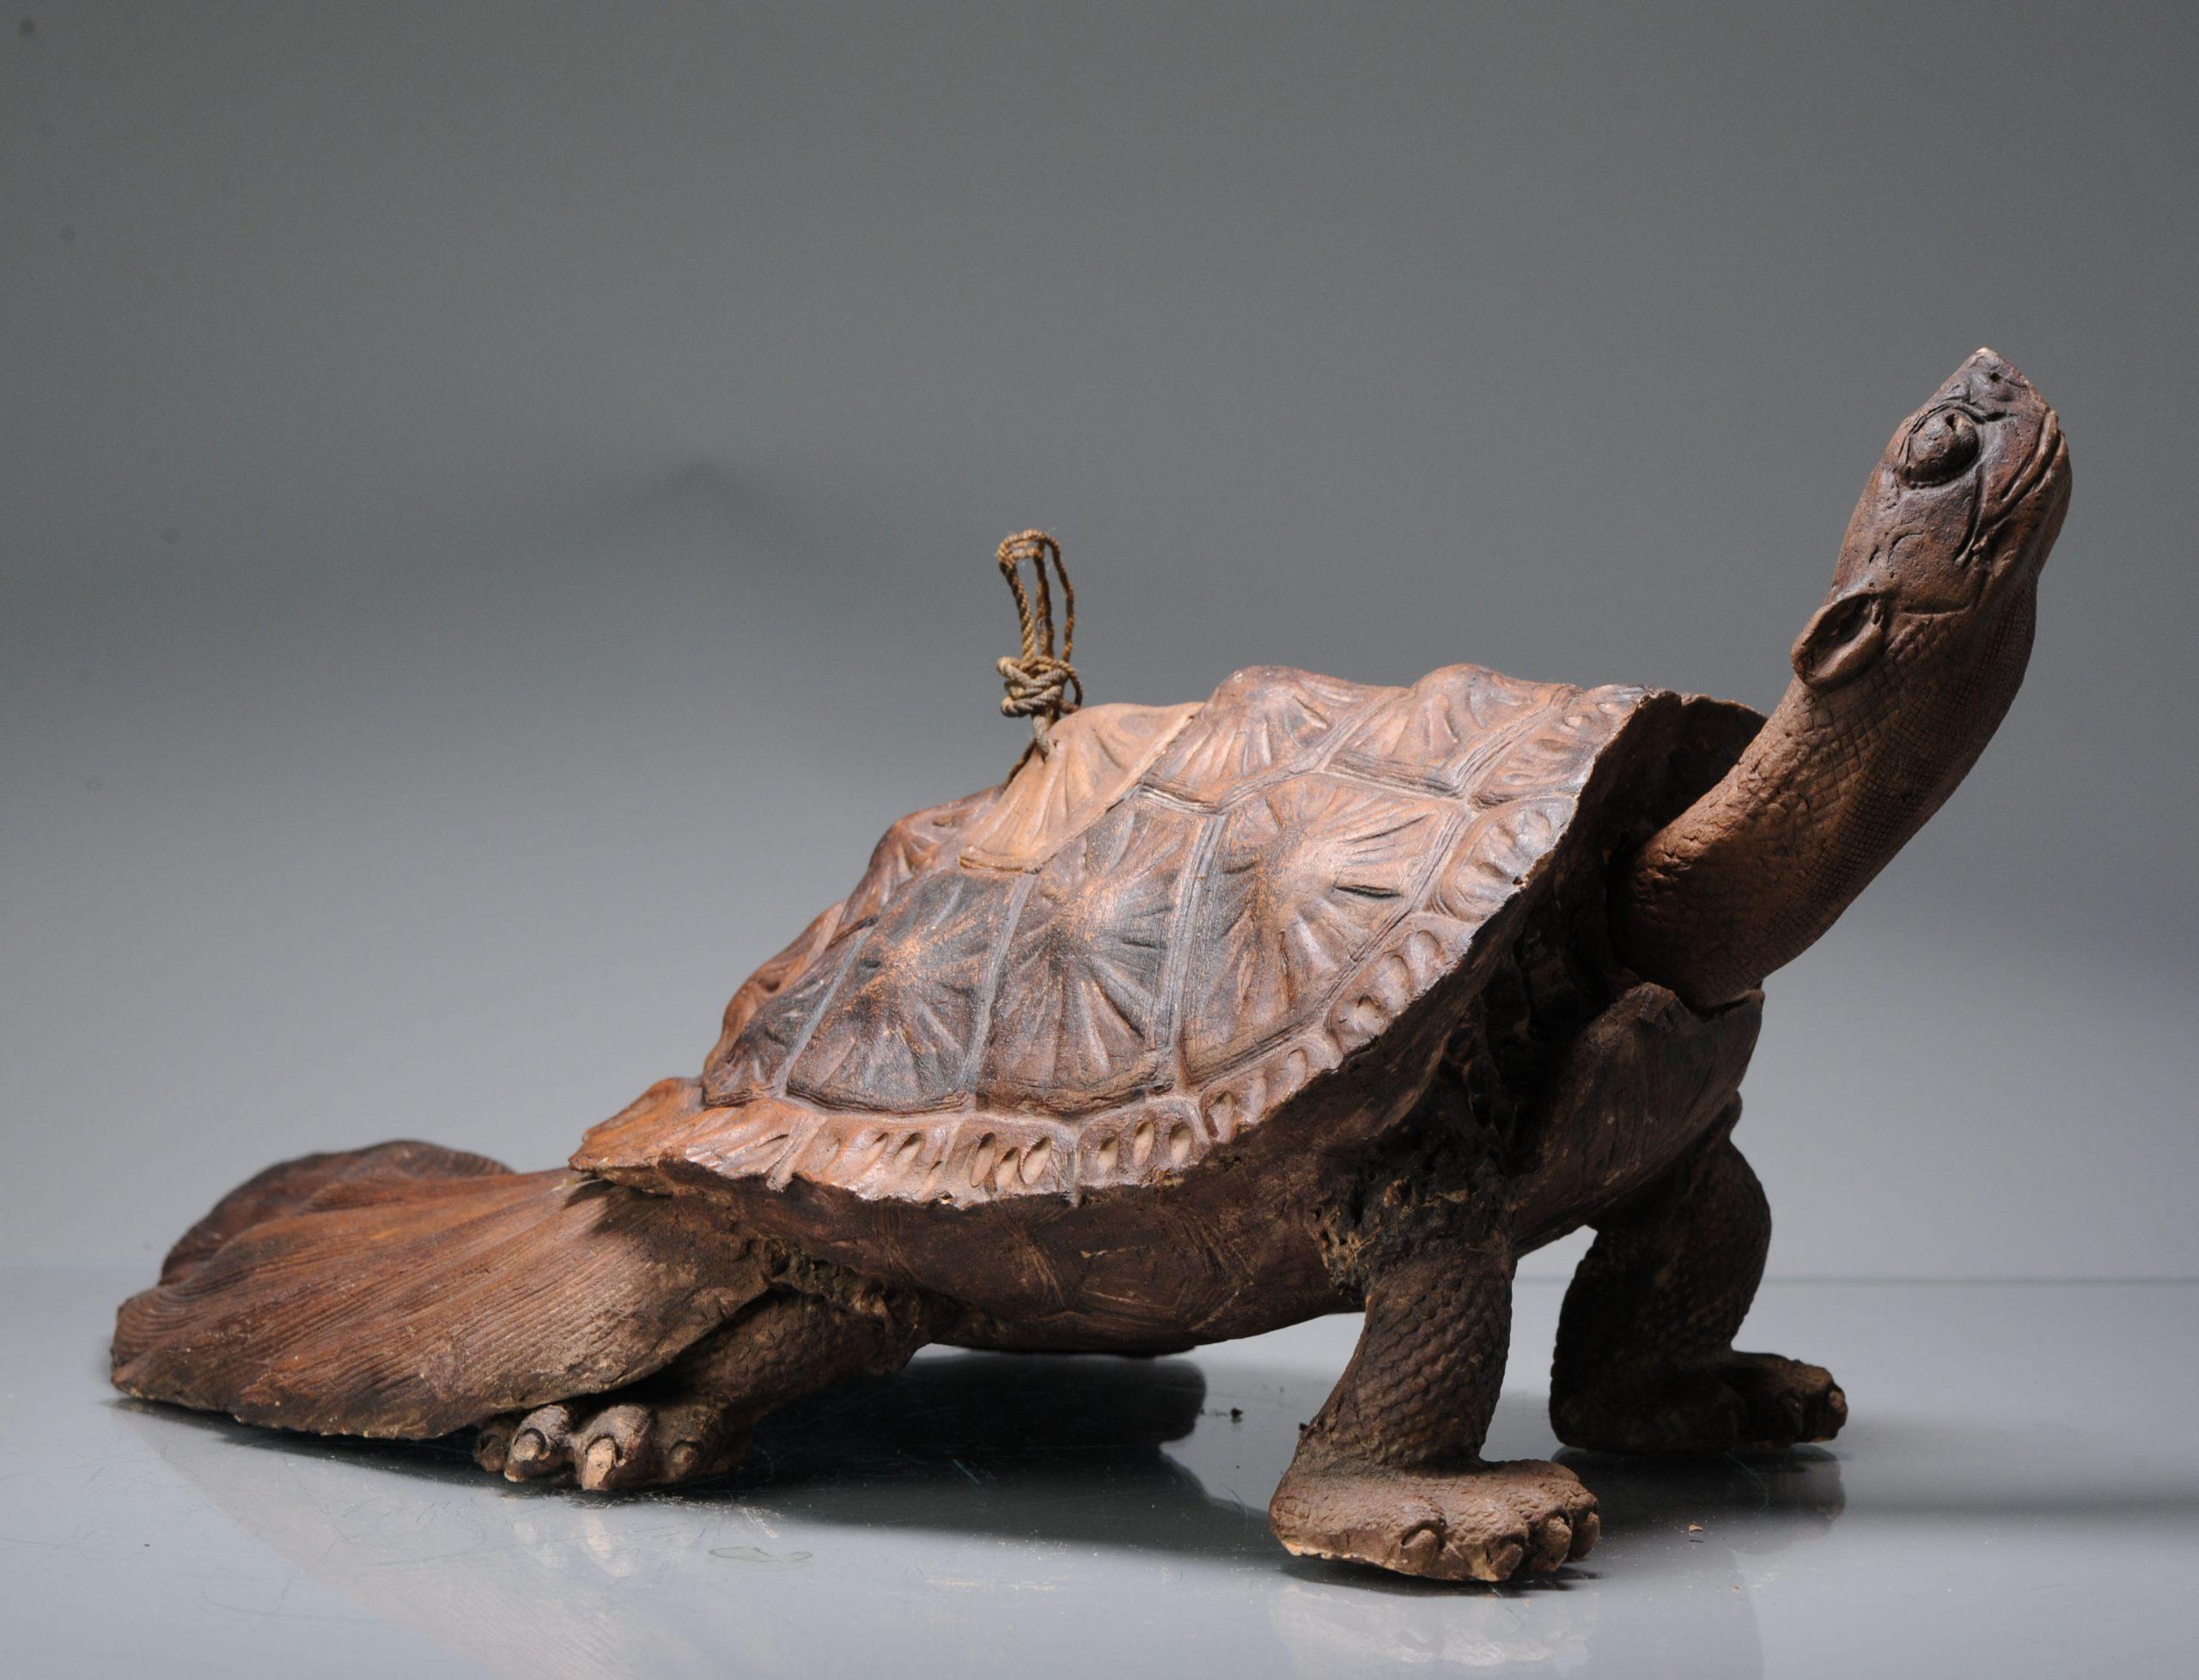 Antique Iwayaki Earthenware Edo Incense Burner of a Turtle 19th Century Japan For Sale 1